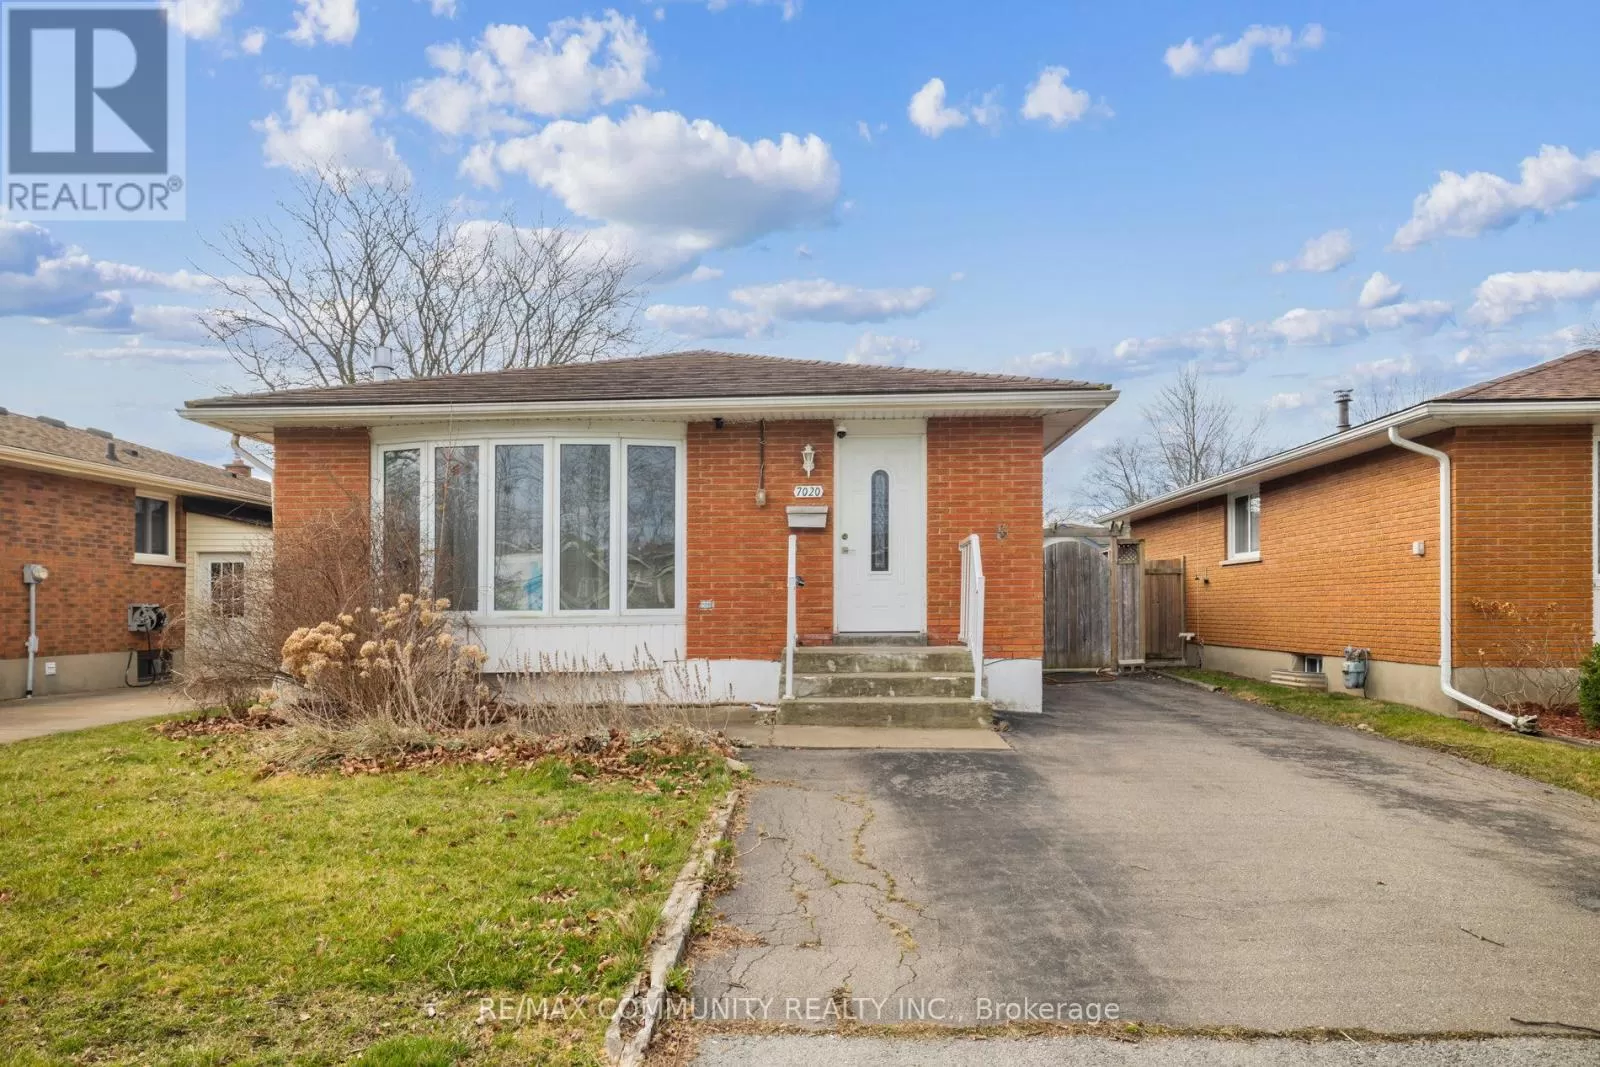 House for rent: 7020 Jill Drive, Niagara Falls, Ontario L2G 7G8